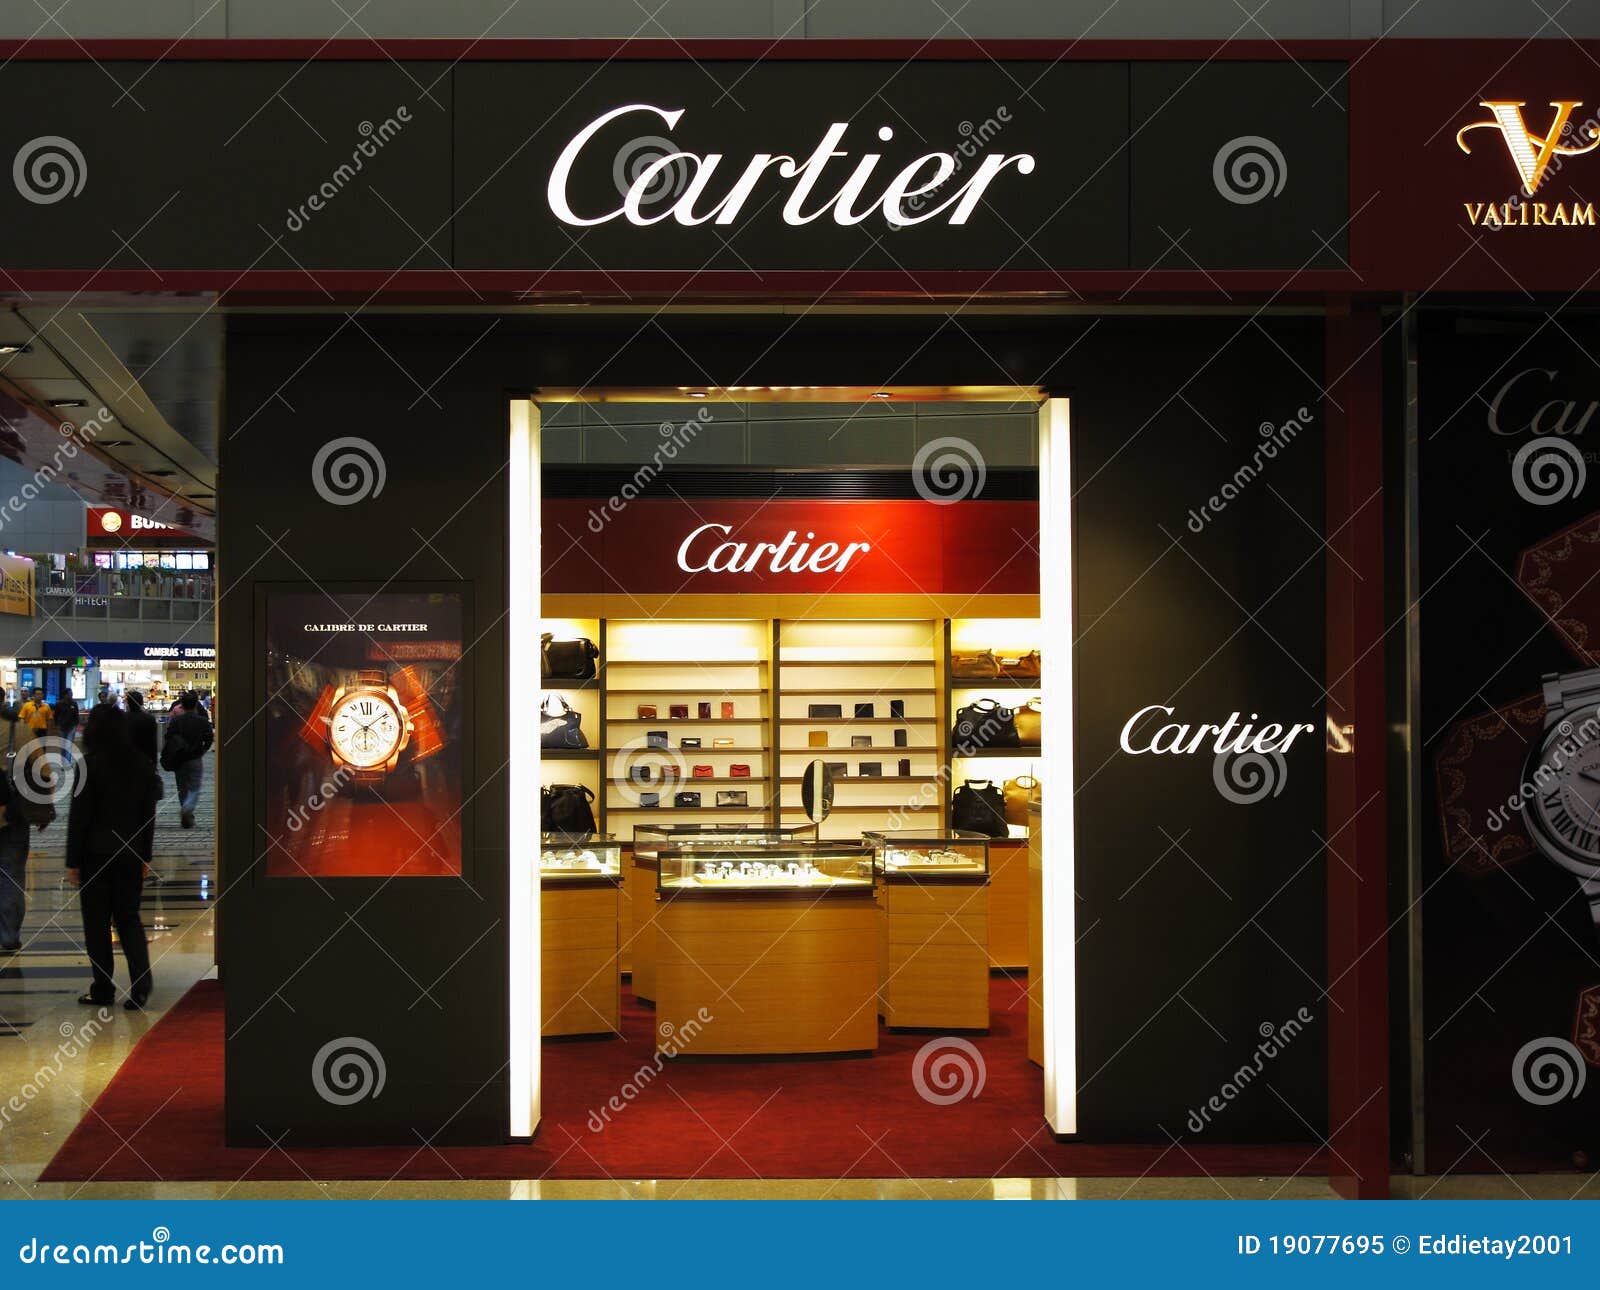 cartier jewelry singapore airport